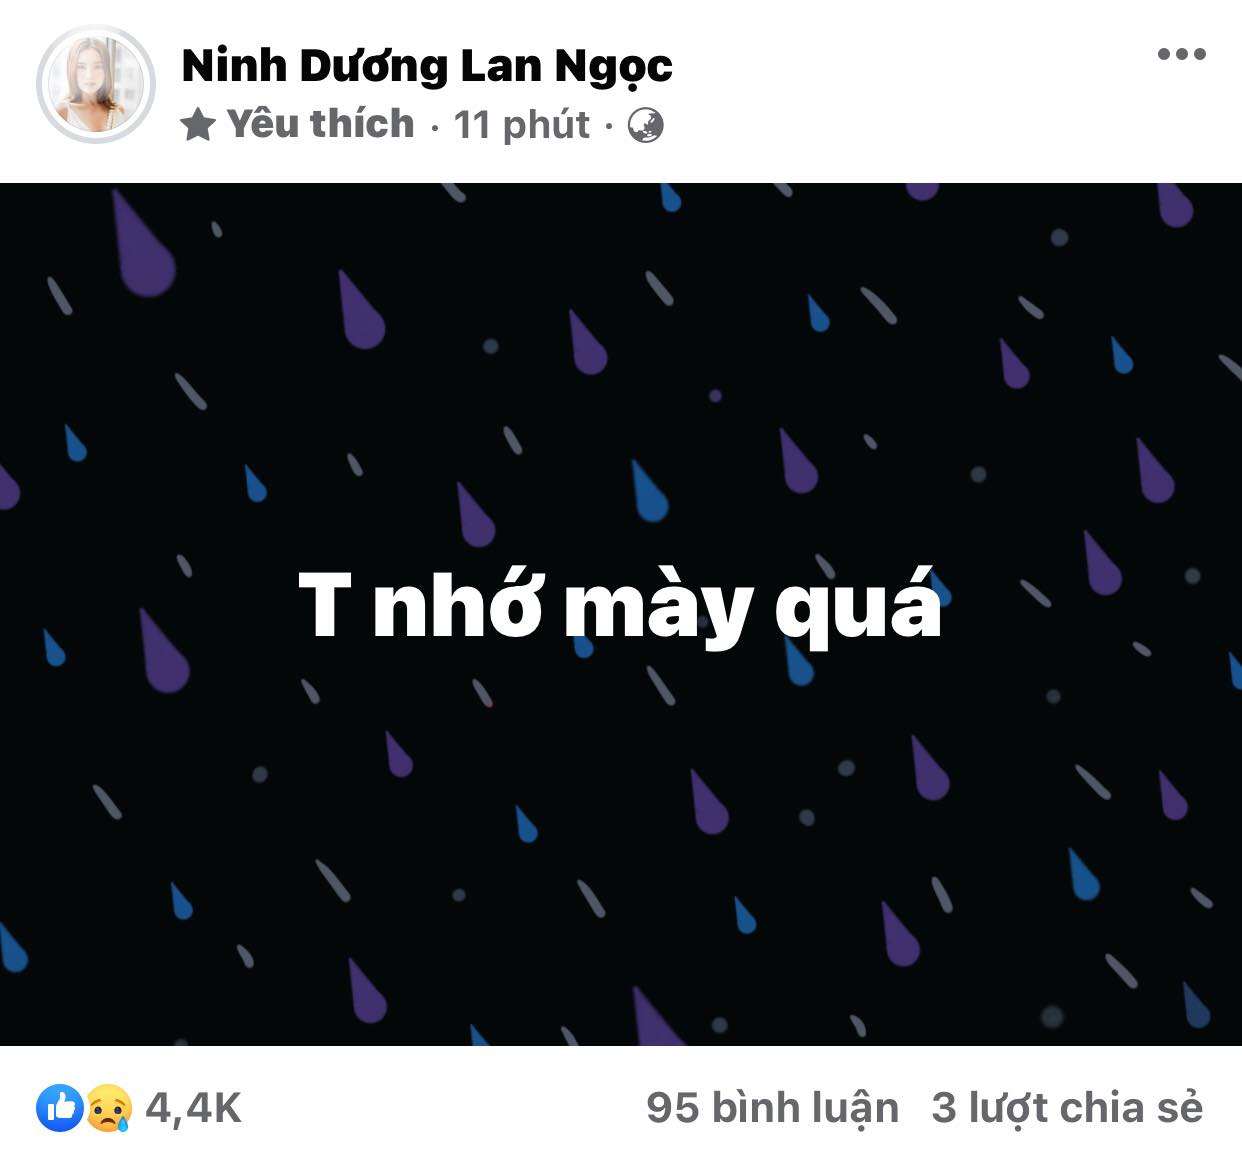 Ninh-duong-lan-ngoc-bat-ngo-dang-status-nho-nhung-da-diet-1-nguoi-cdm-xon-xao-ve-danh-tinh